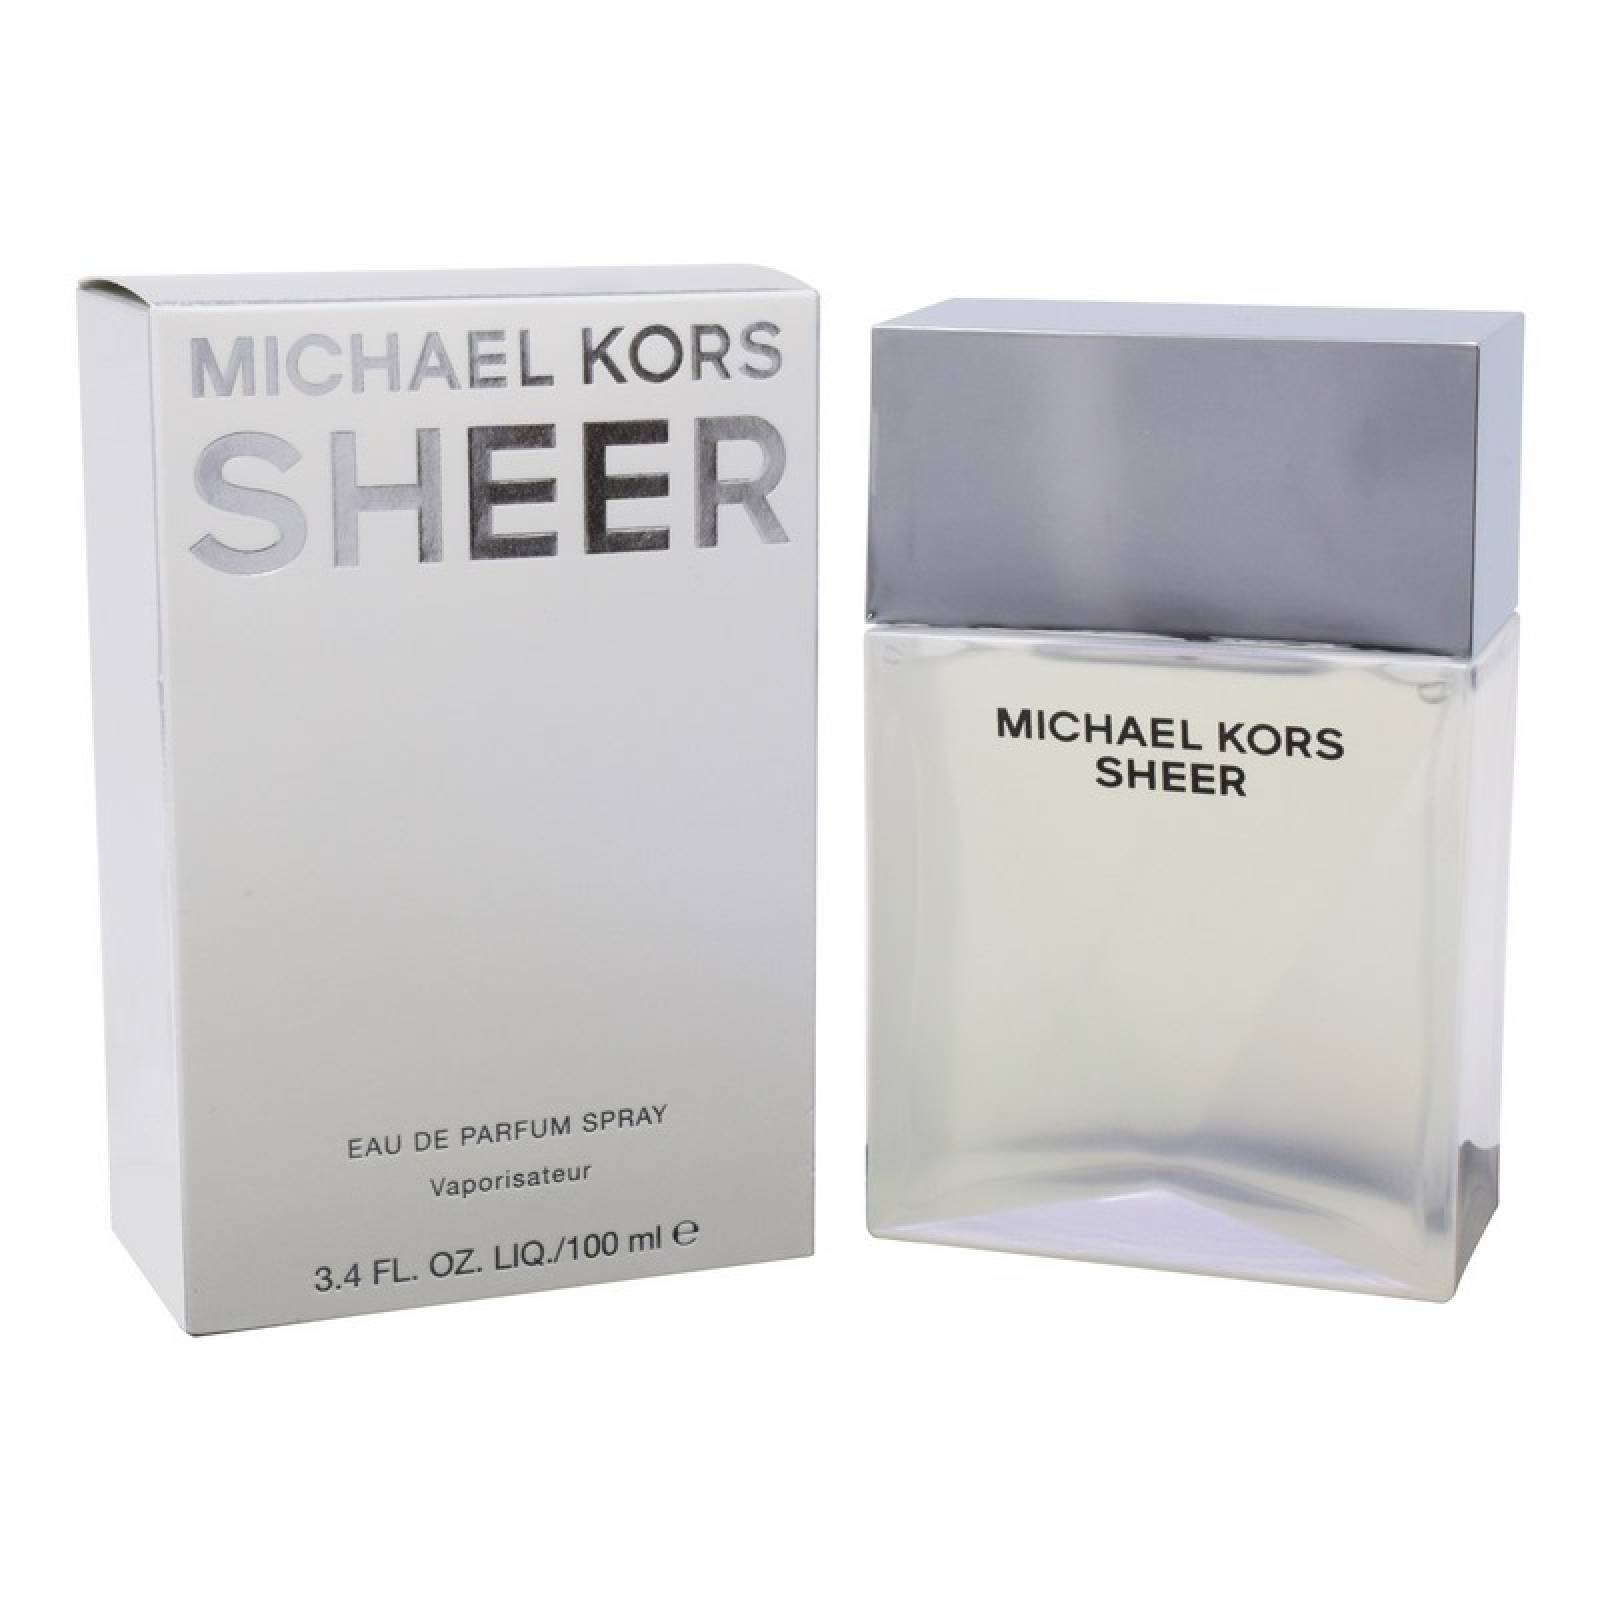 Michael Kors Sheer 100 ml Edp Spray de Michael Kors para Dama